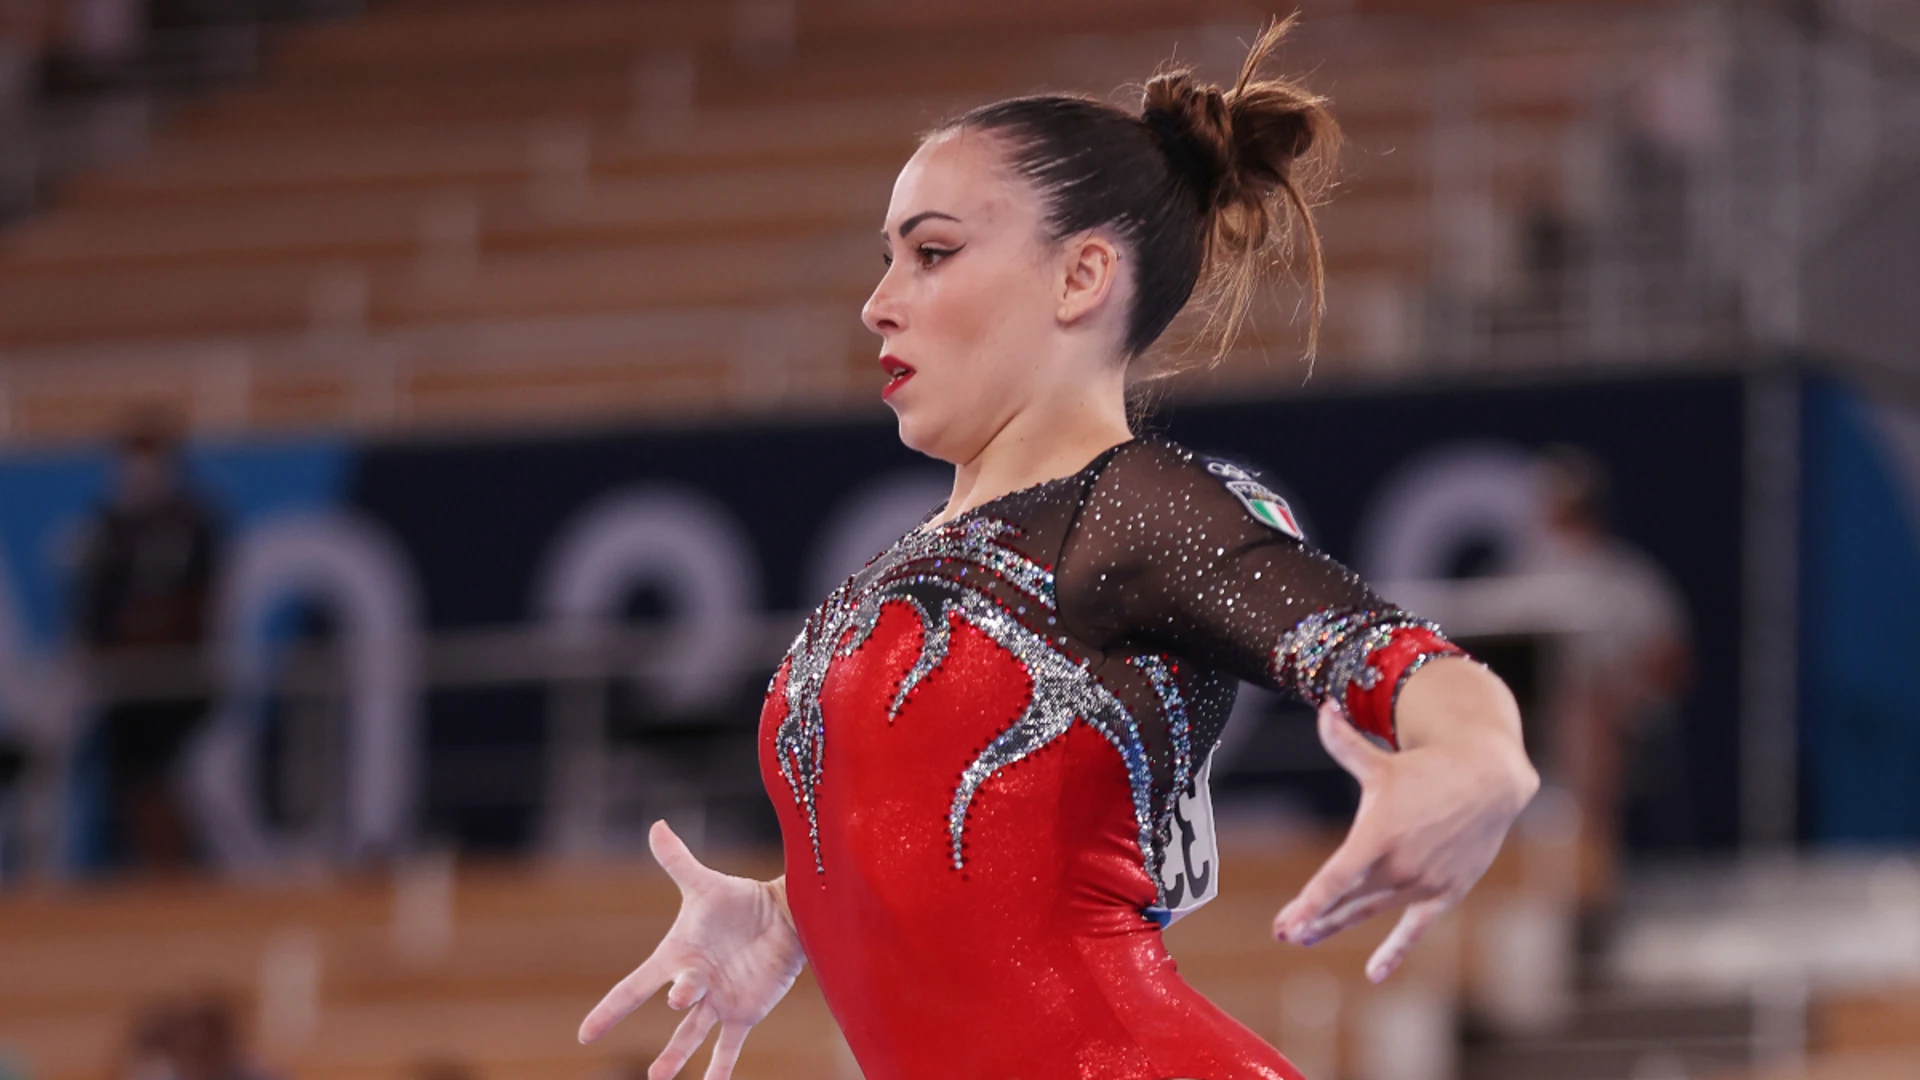 Italian gymnast Ferrari to miss Olympics with injury